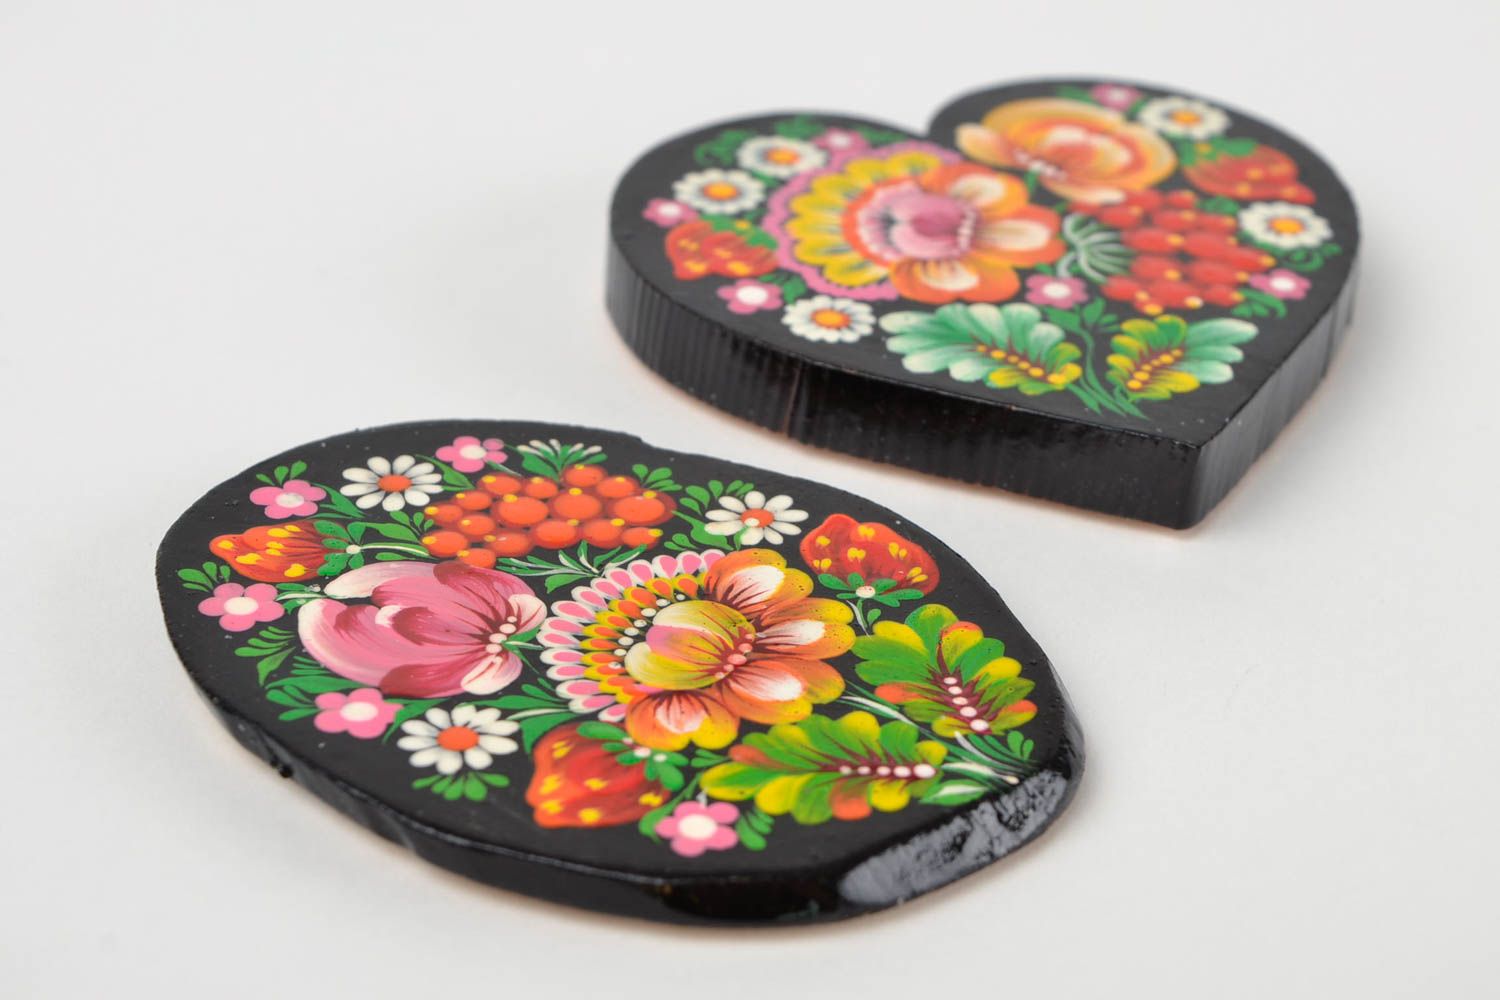 Handmade fridge magnets stylish wooden souvenirs unusual kitchen decor 2 pieces photo 4